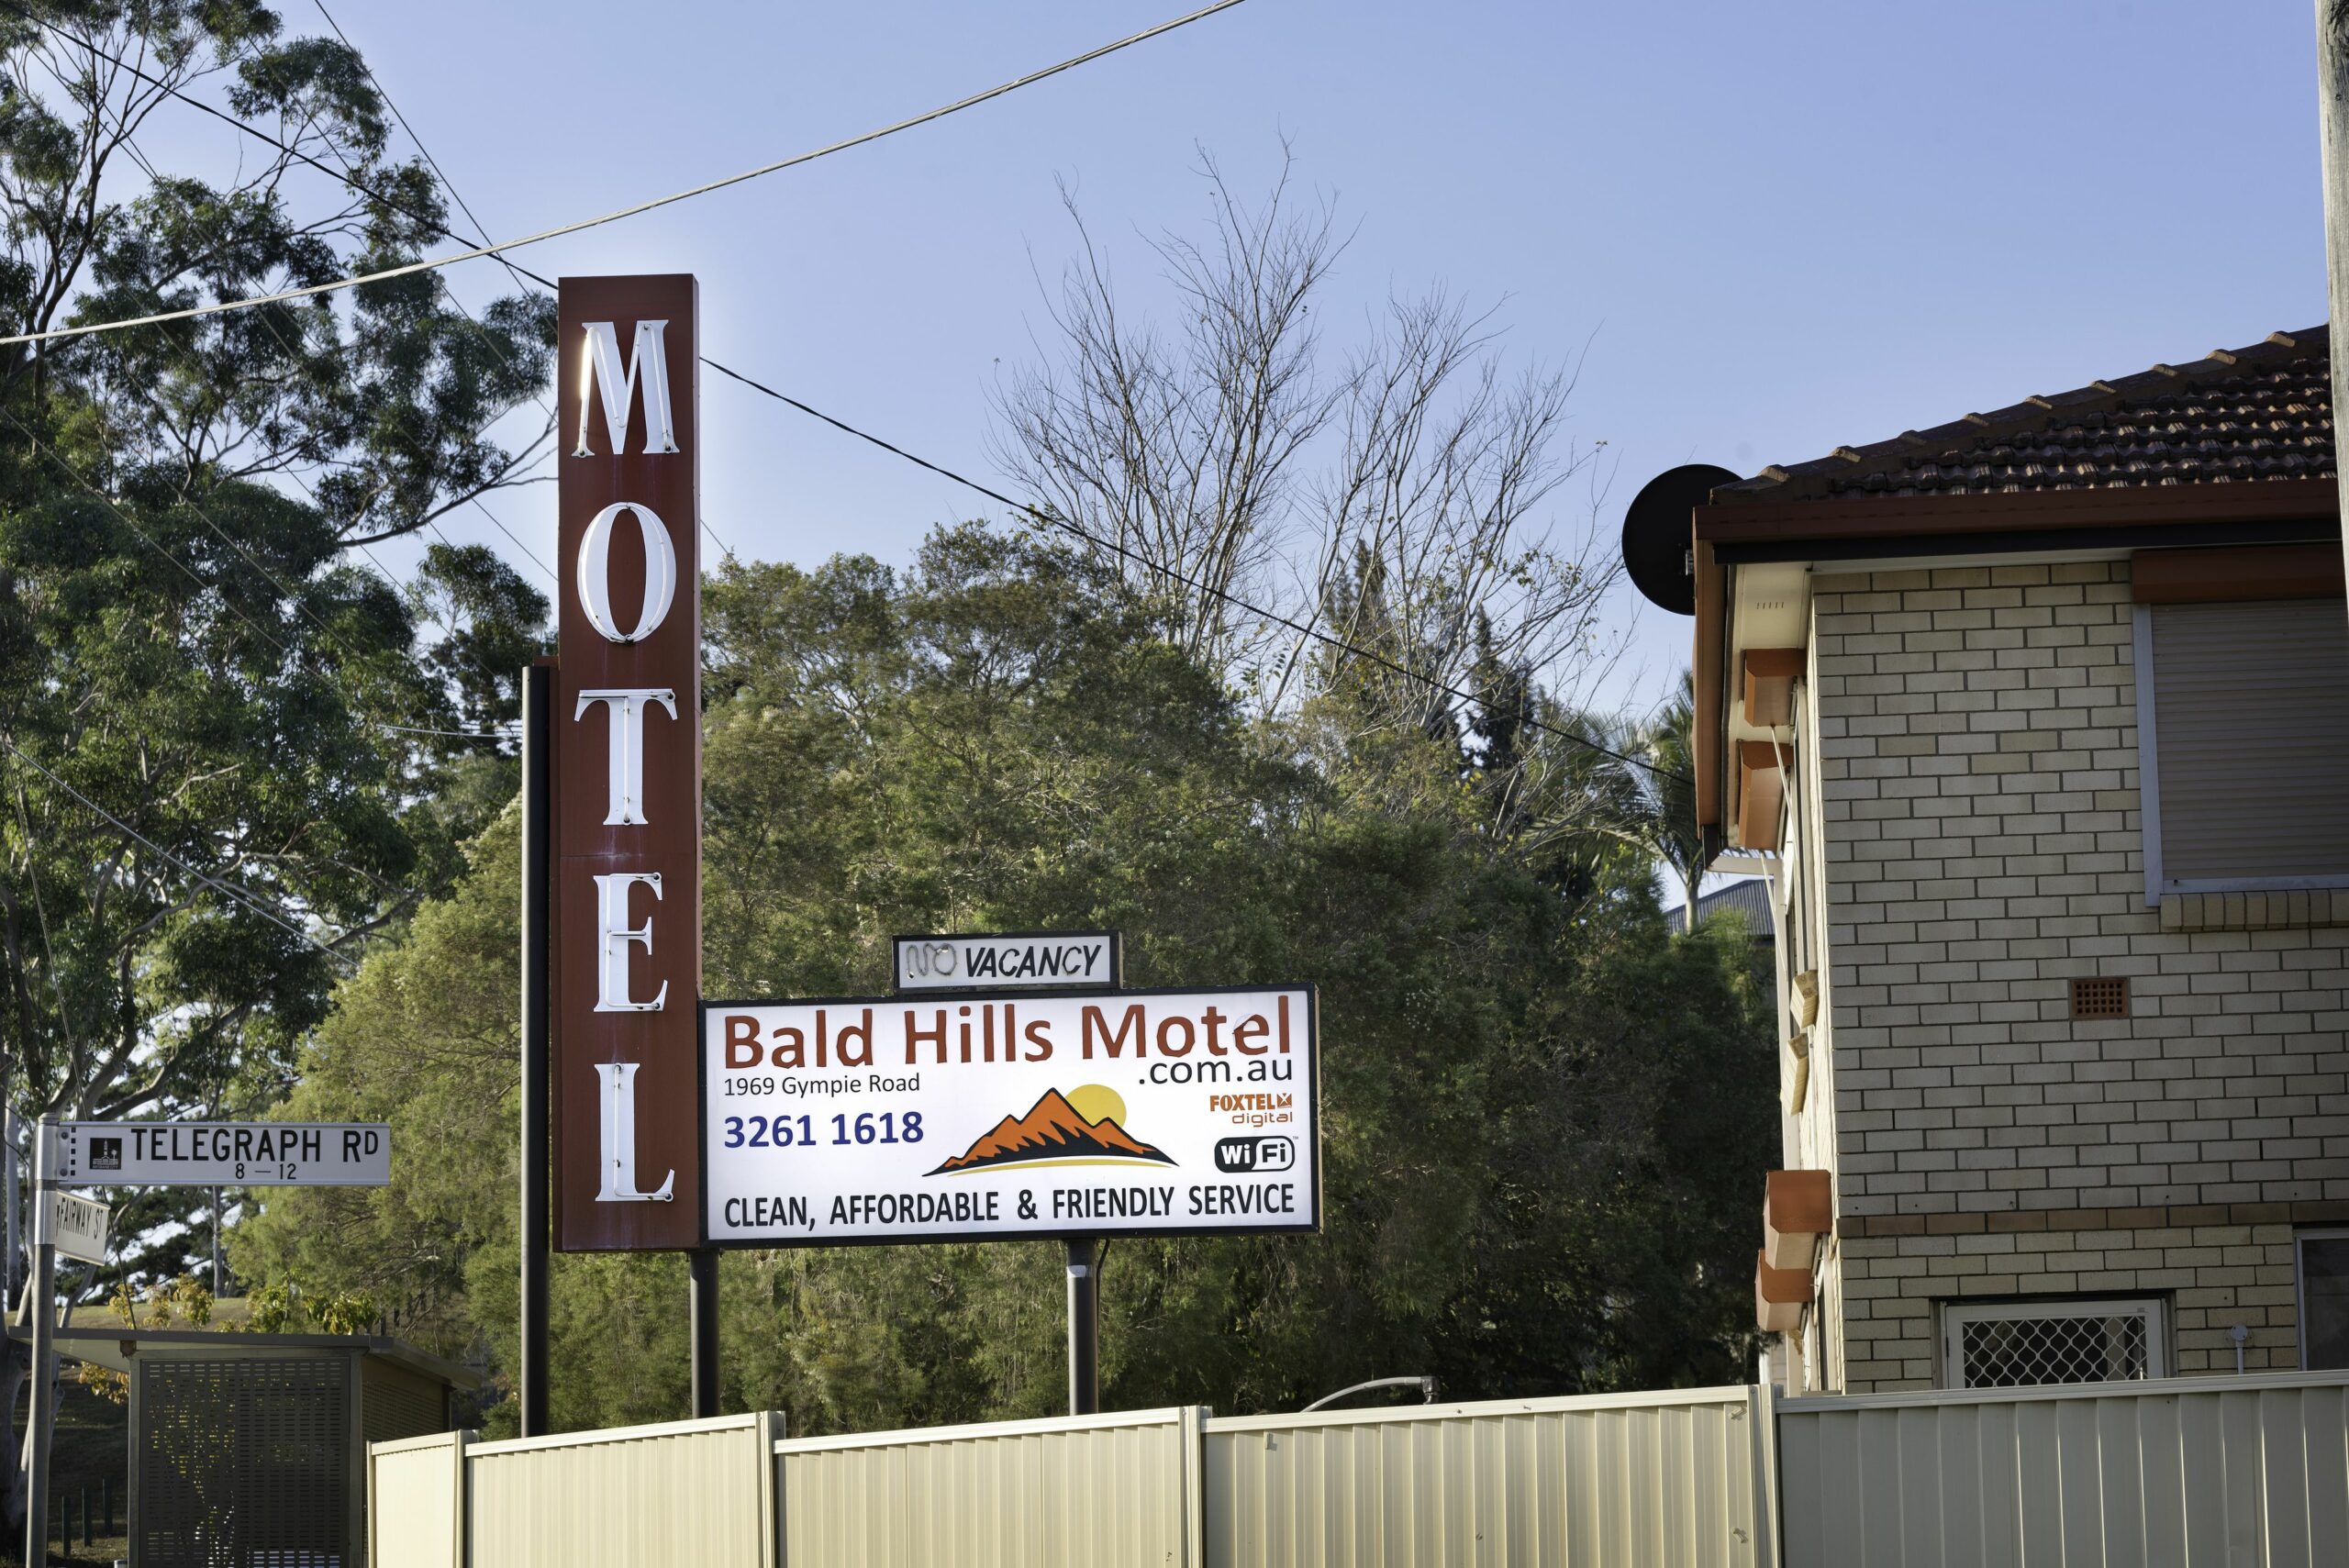 Bald Hills Motel